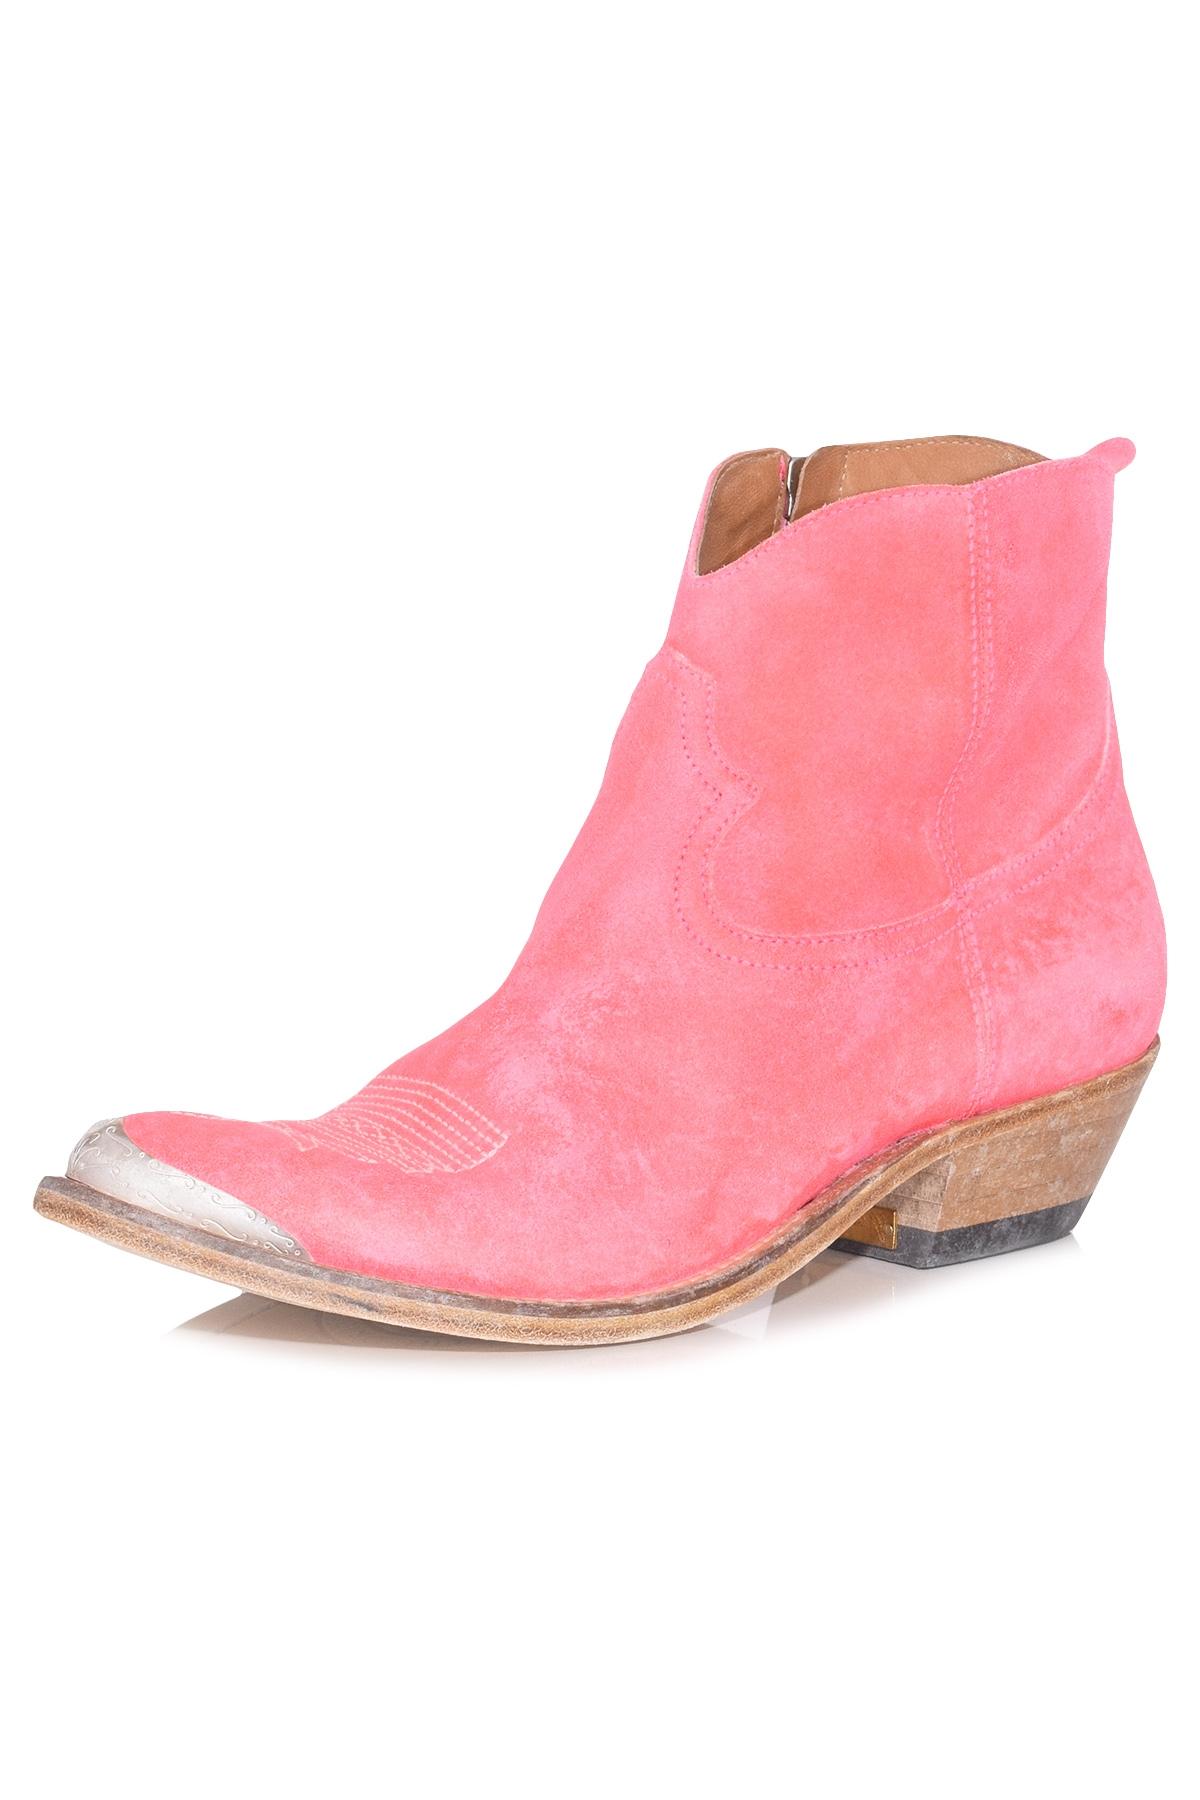 golden goose pink boots